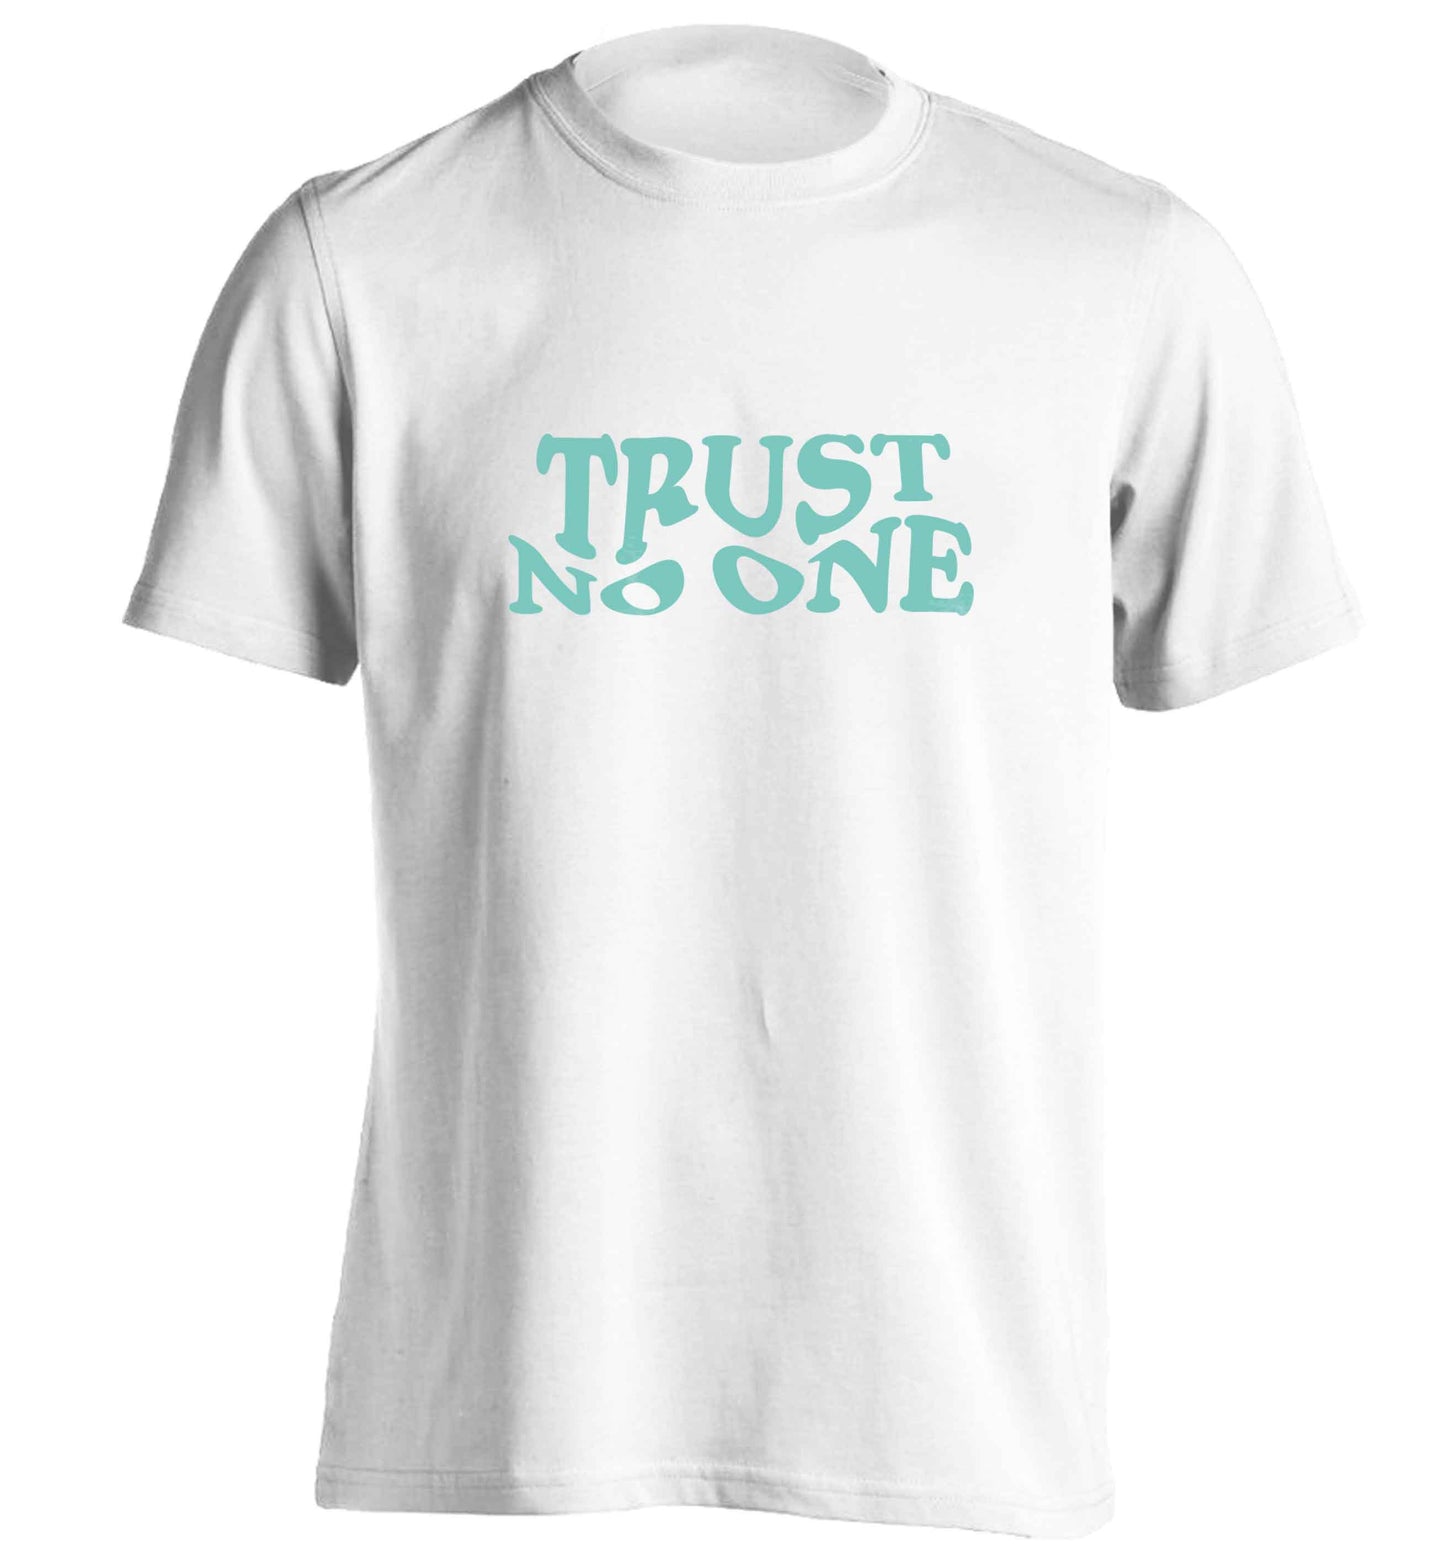 Trust no one adults unisex white Tshirt 2XL